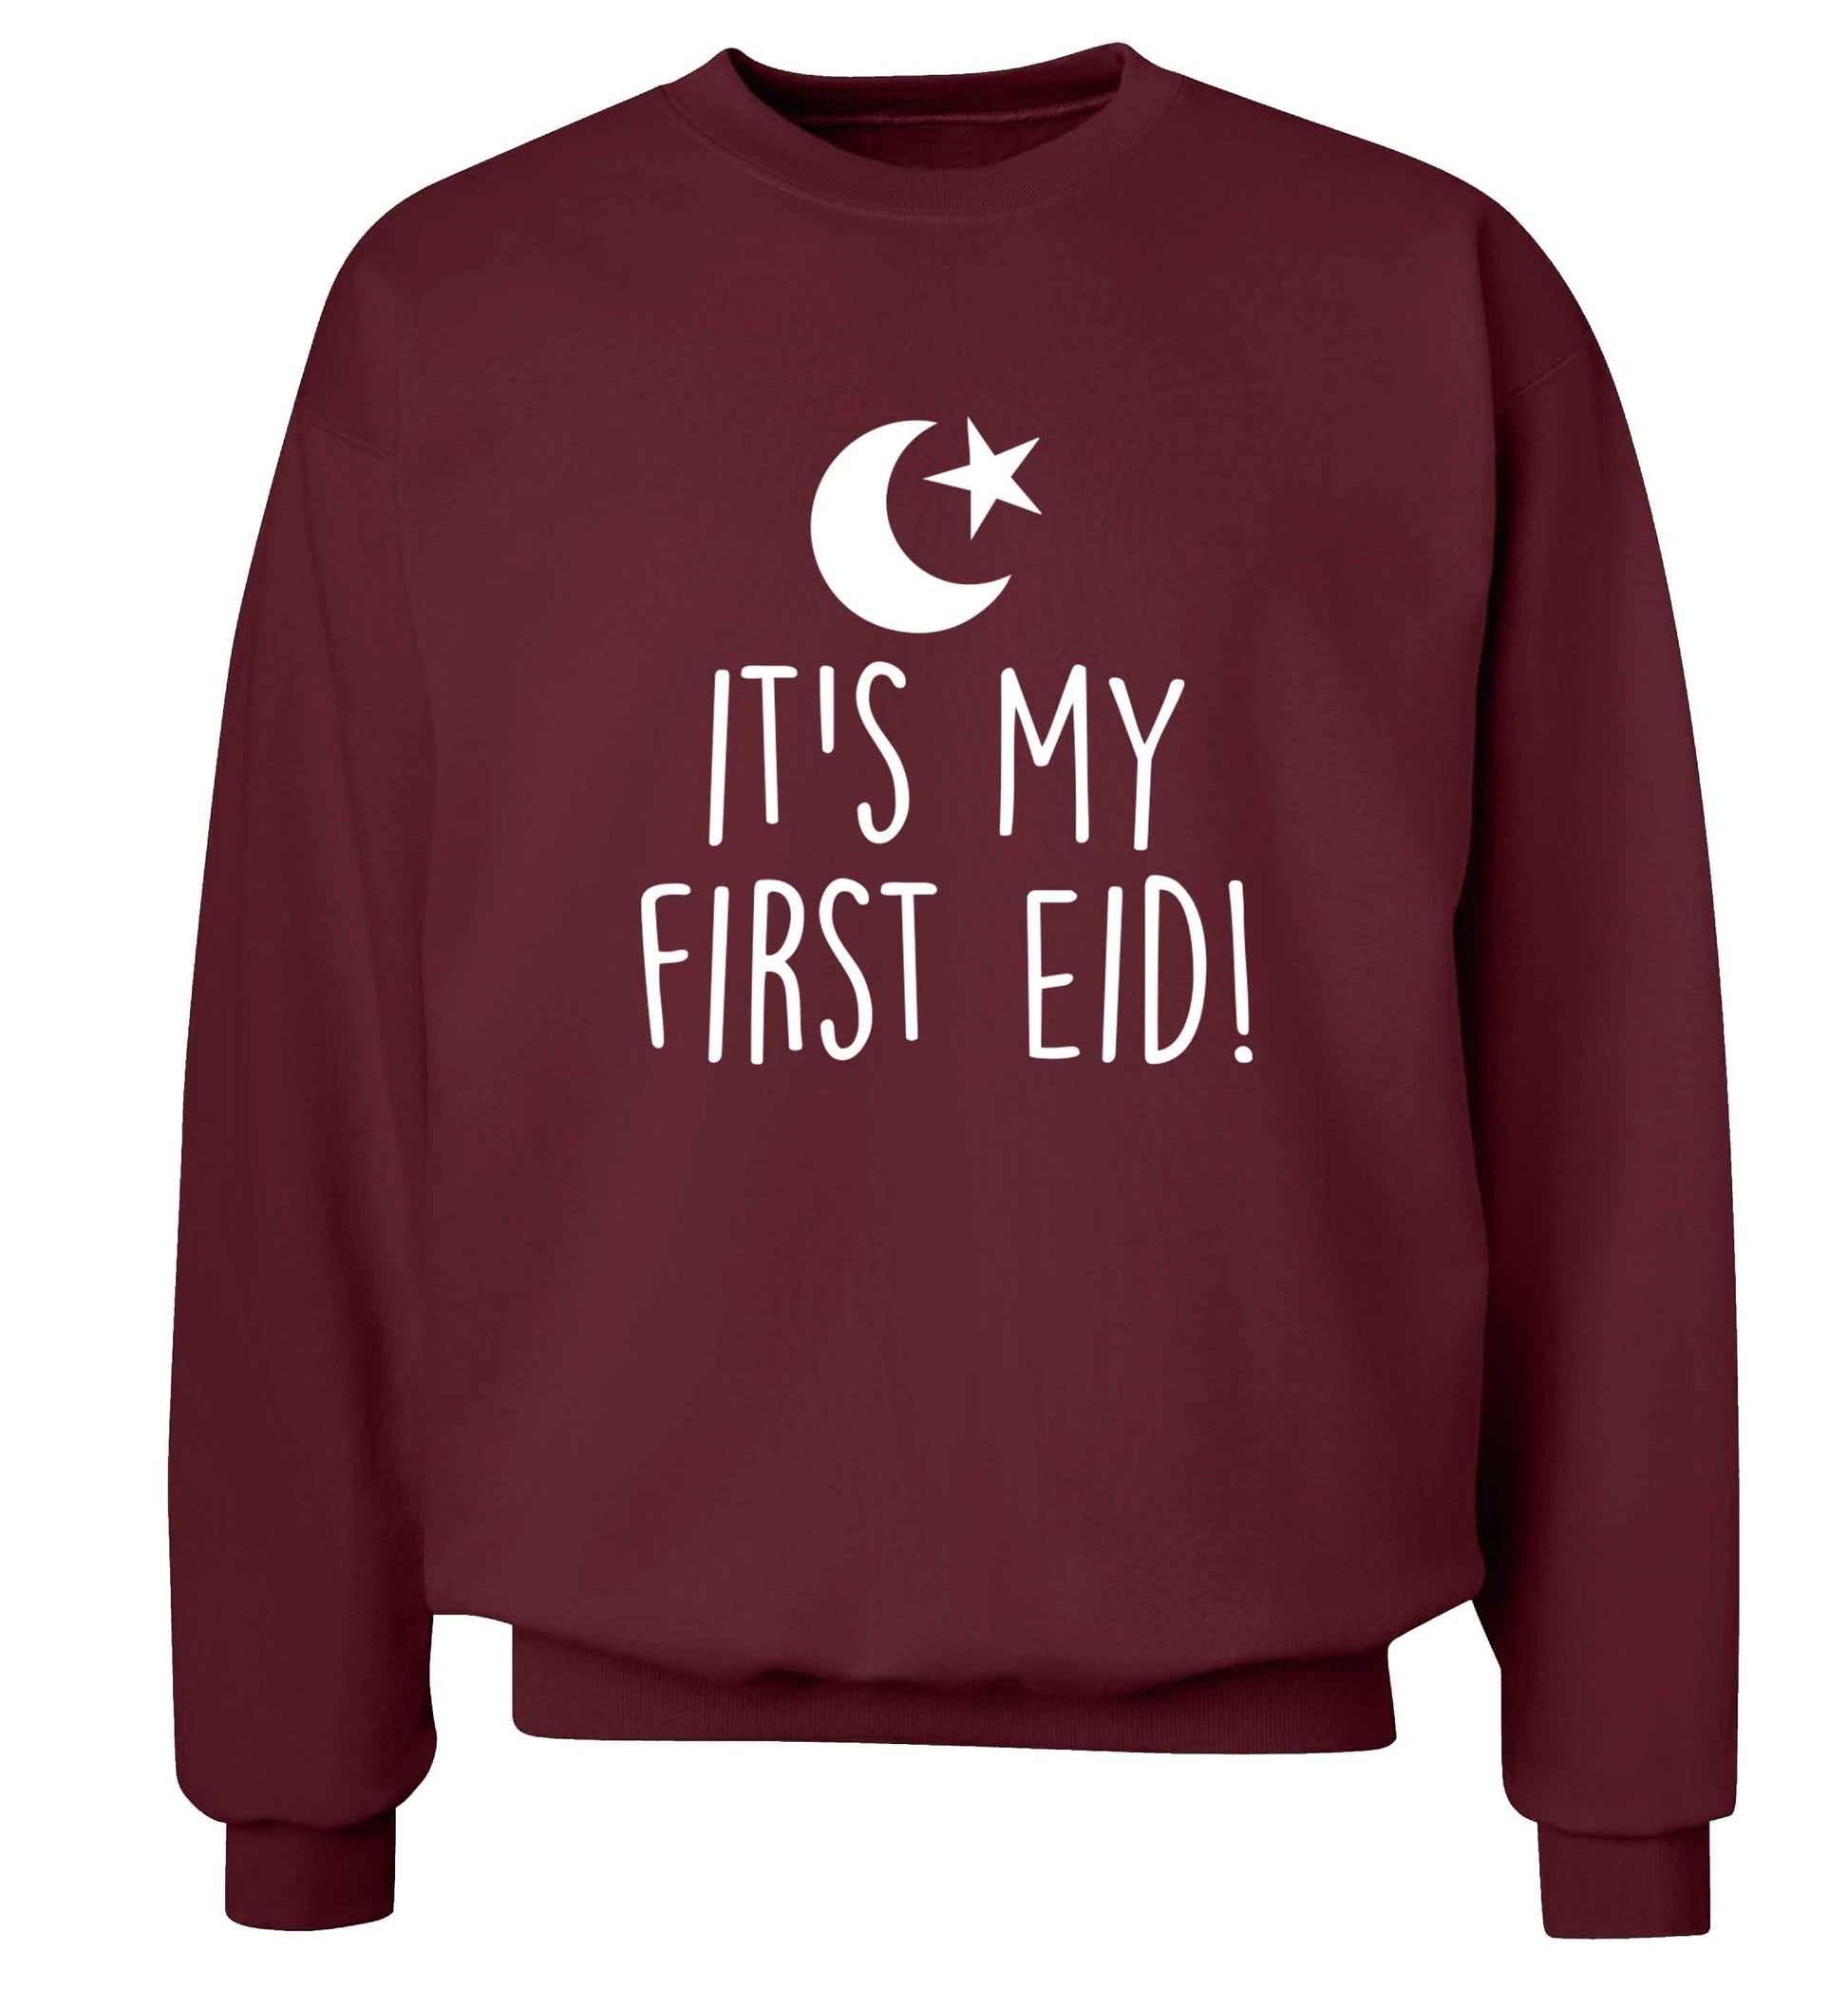 It's my first Eid adult's unisex maroon sweater 2XL